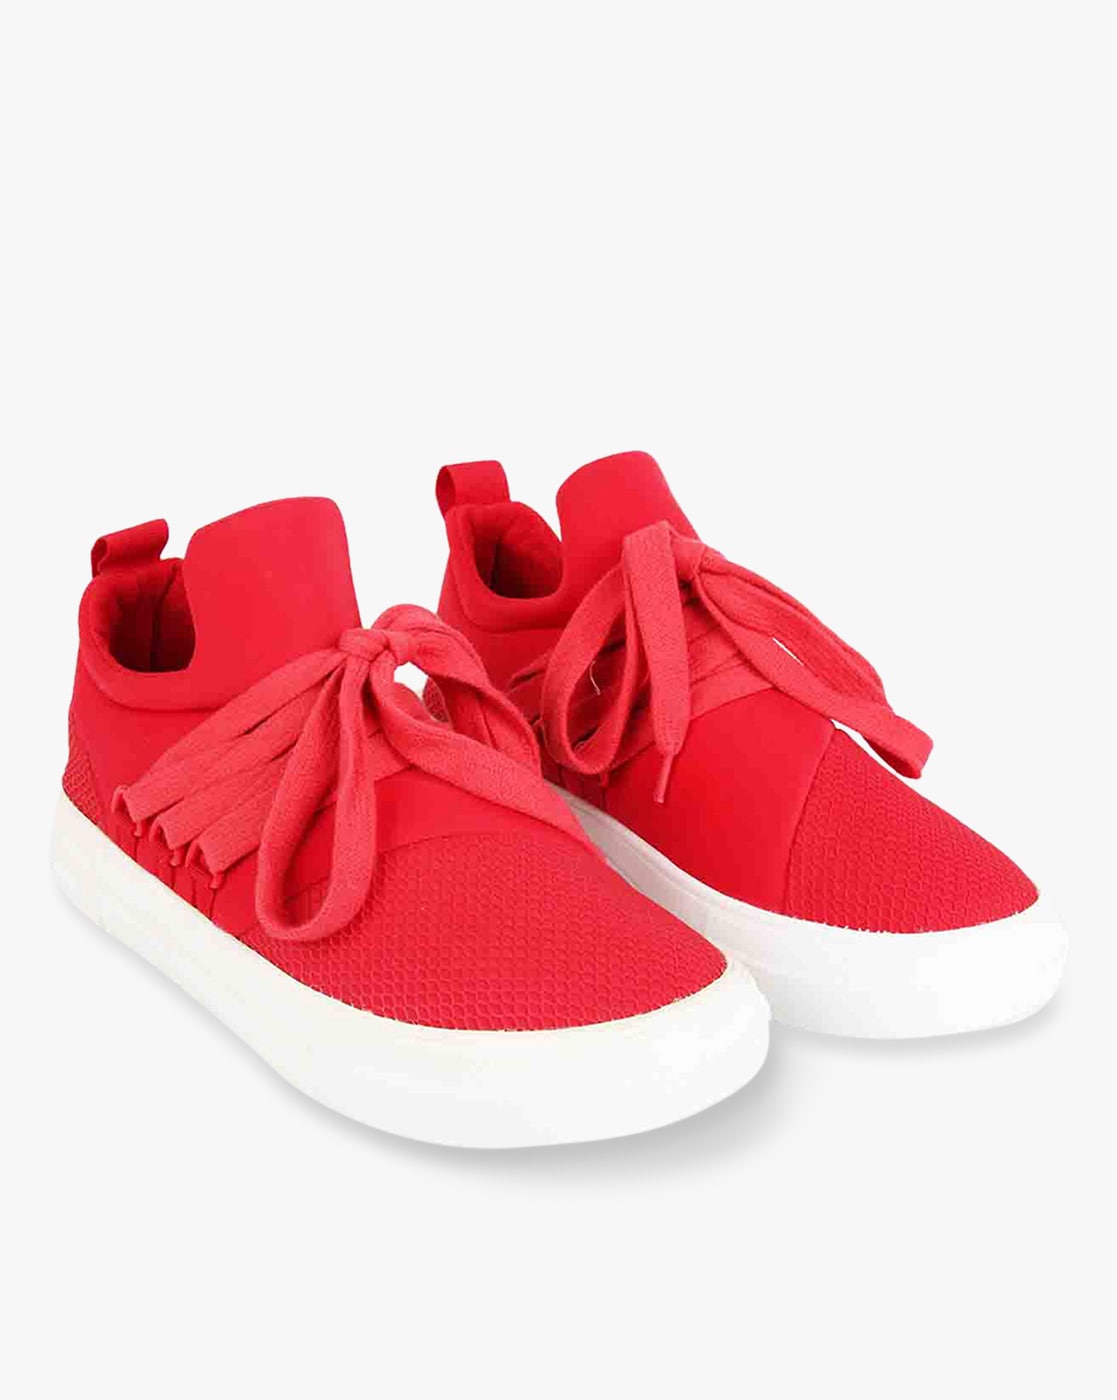 steve madden red sneakers